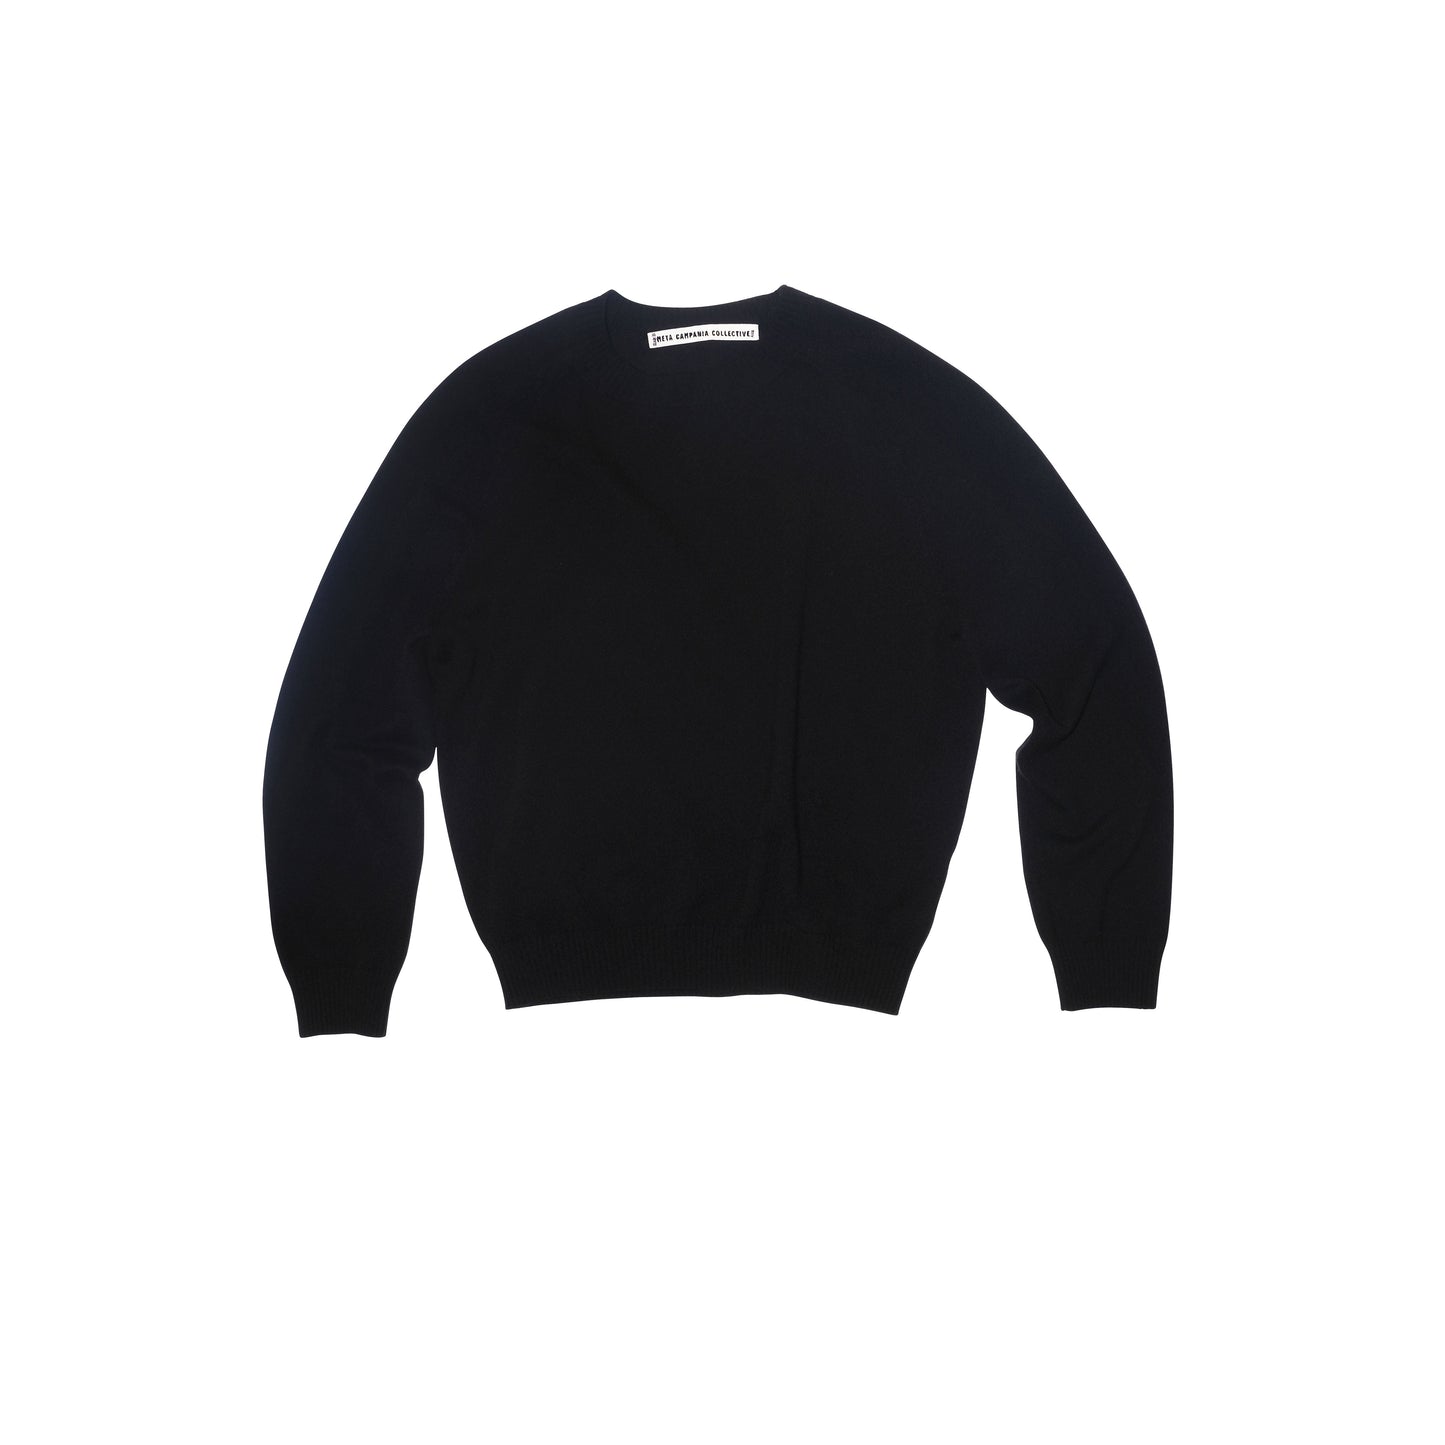 Jack Crew Neck Cashmere Sweater Black